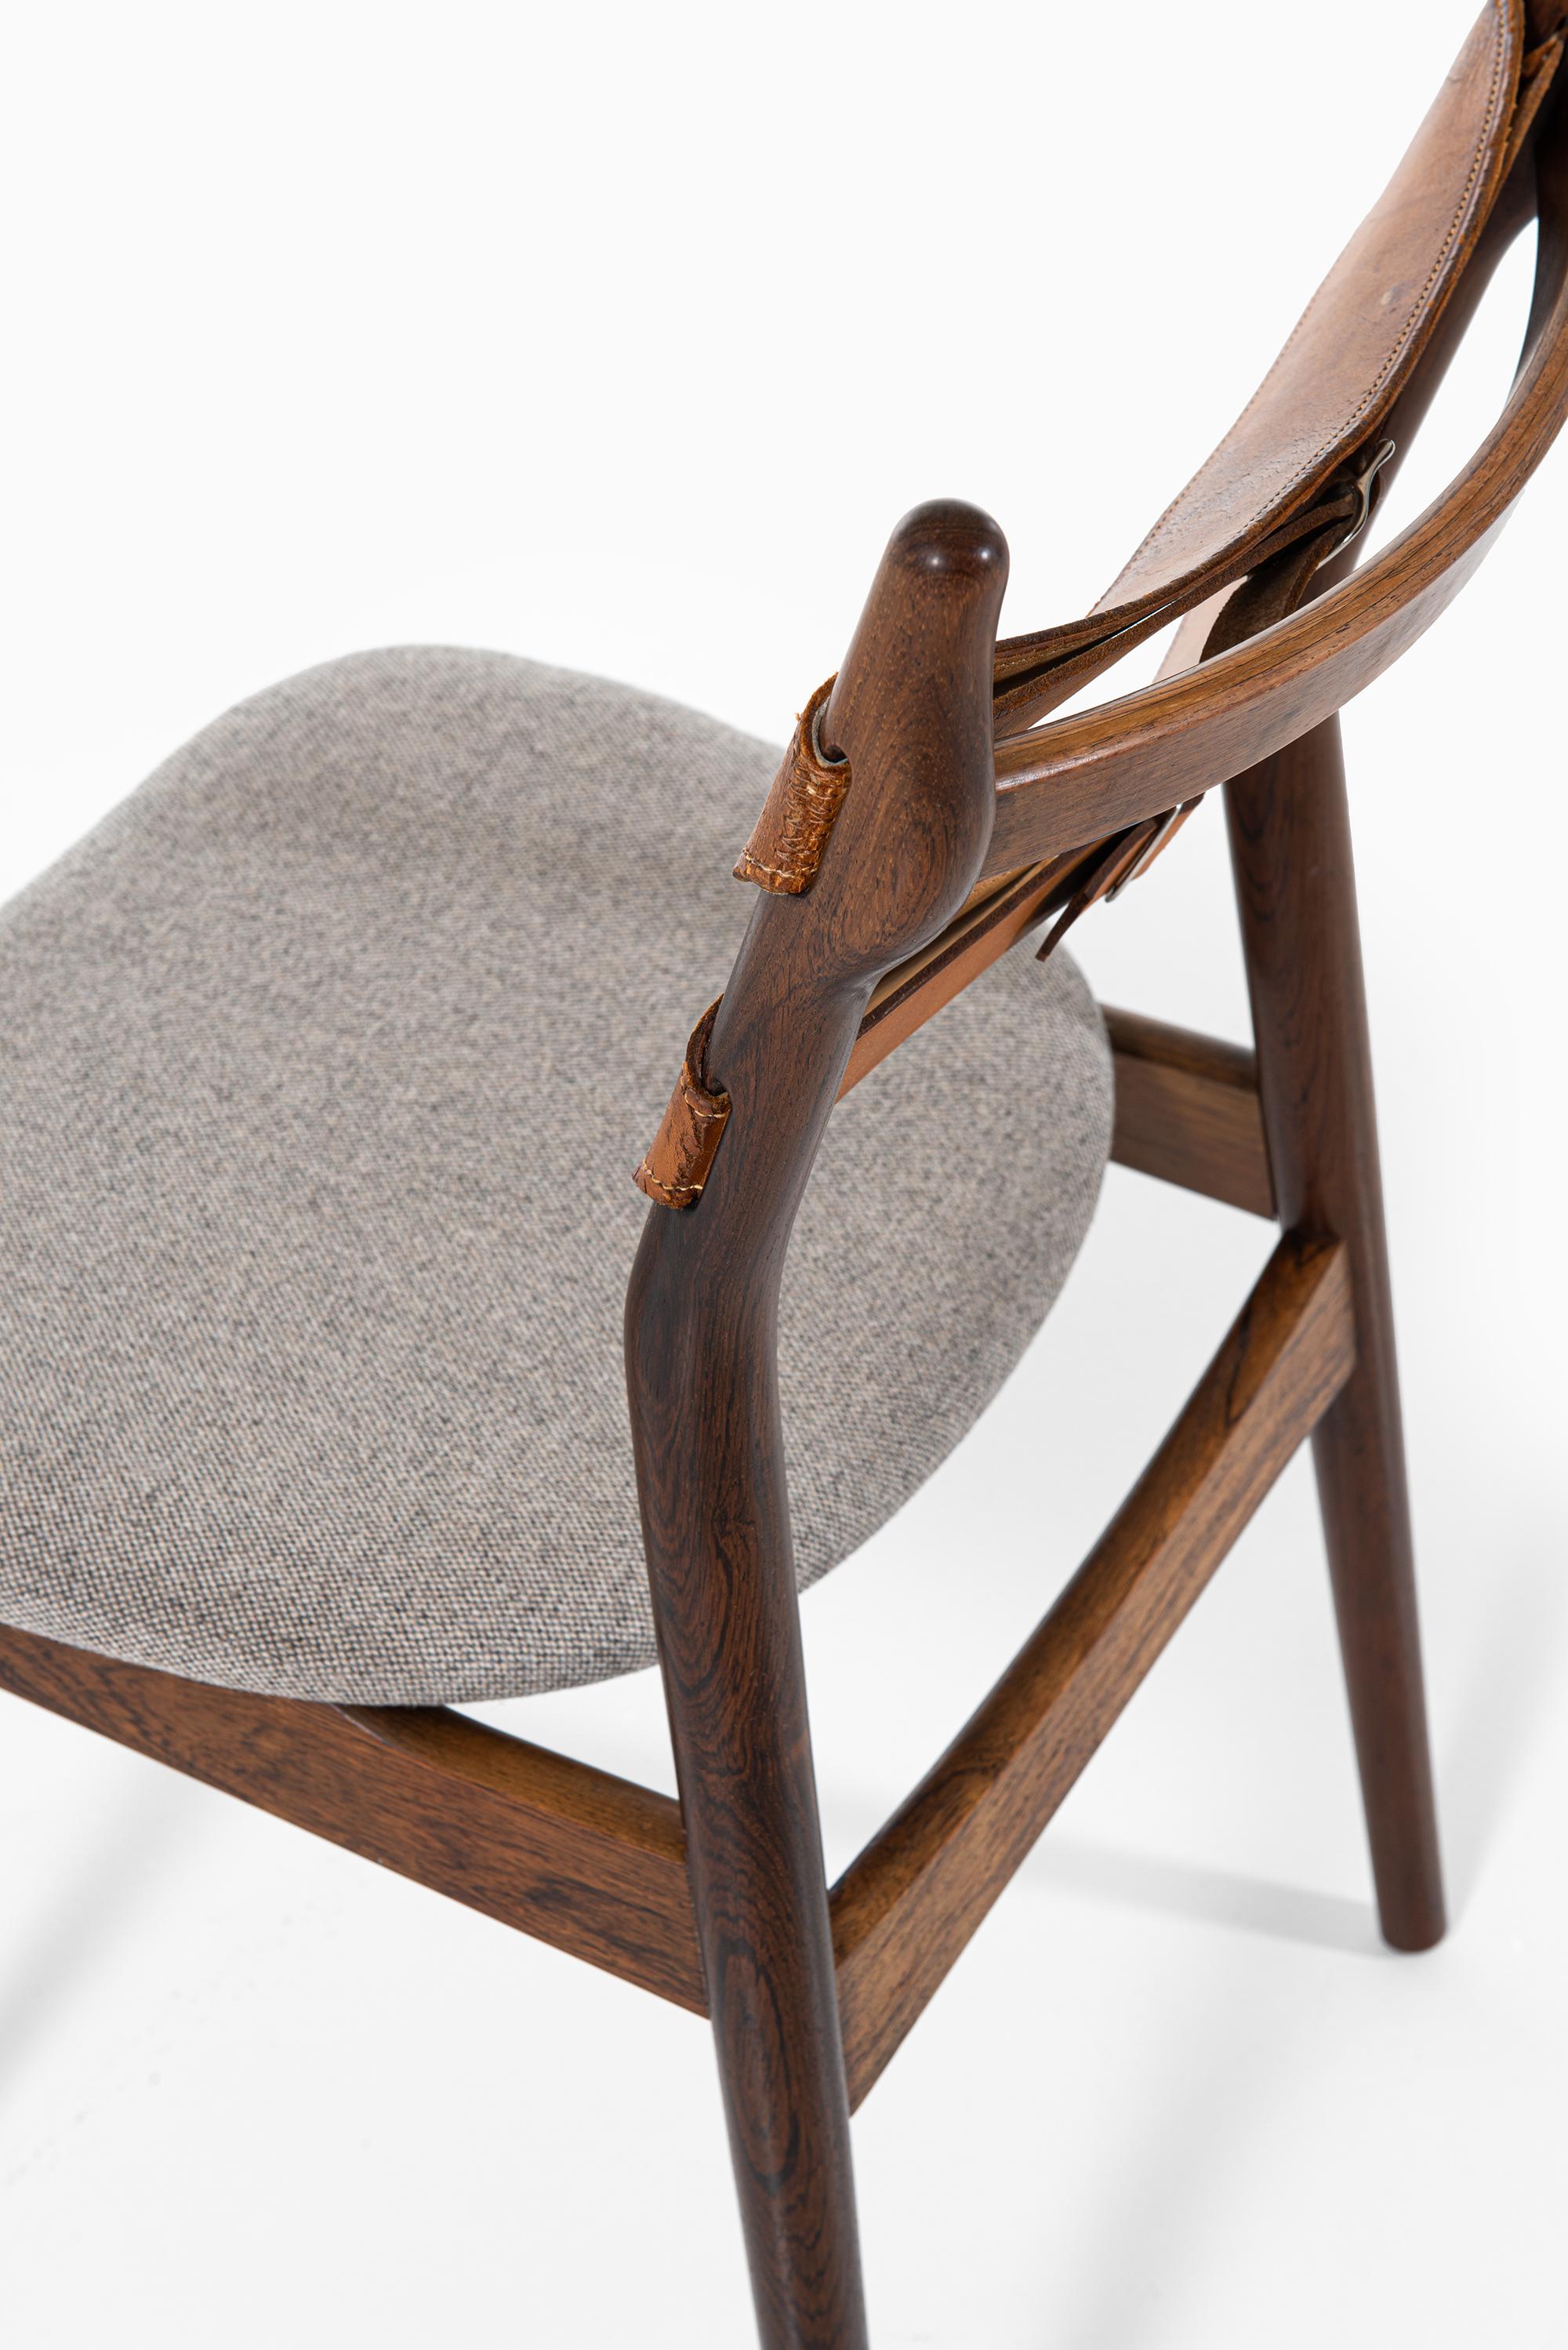 Mid-20th Century Helge Sibast Dining Chairs Model 59 by Sibast Møbelfabrik in Denmark